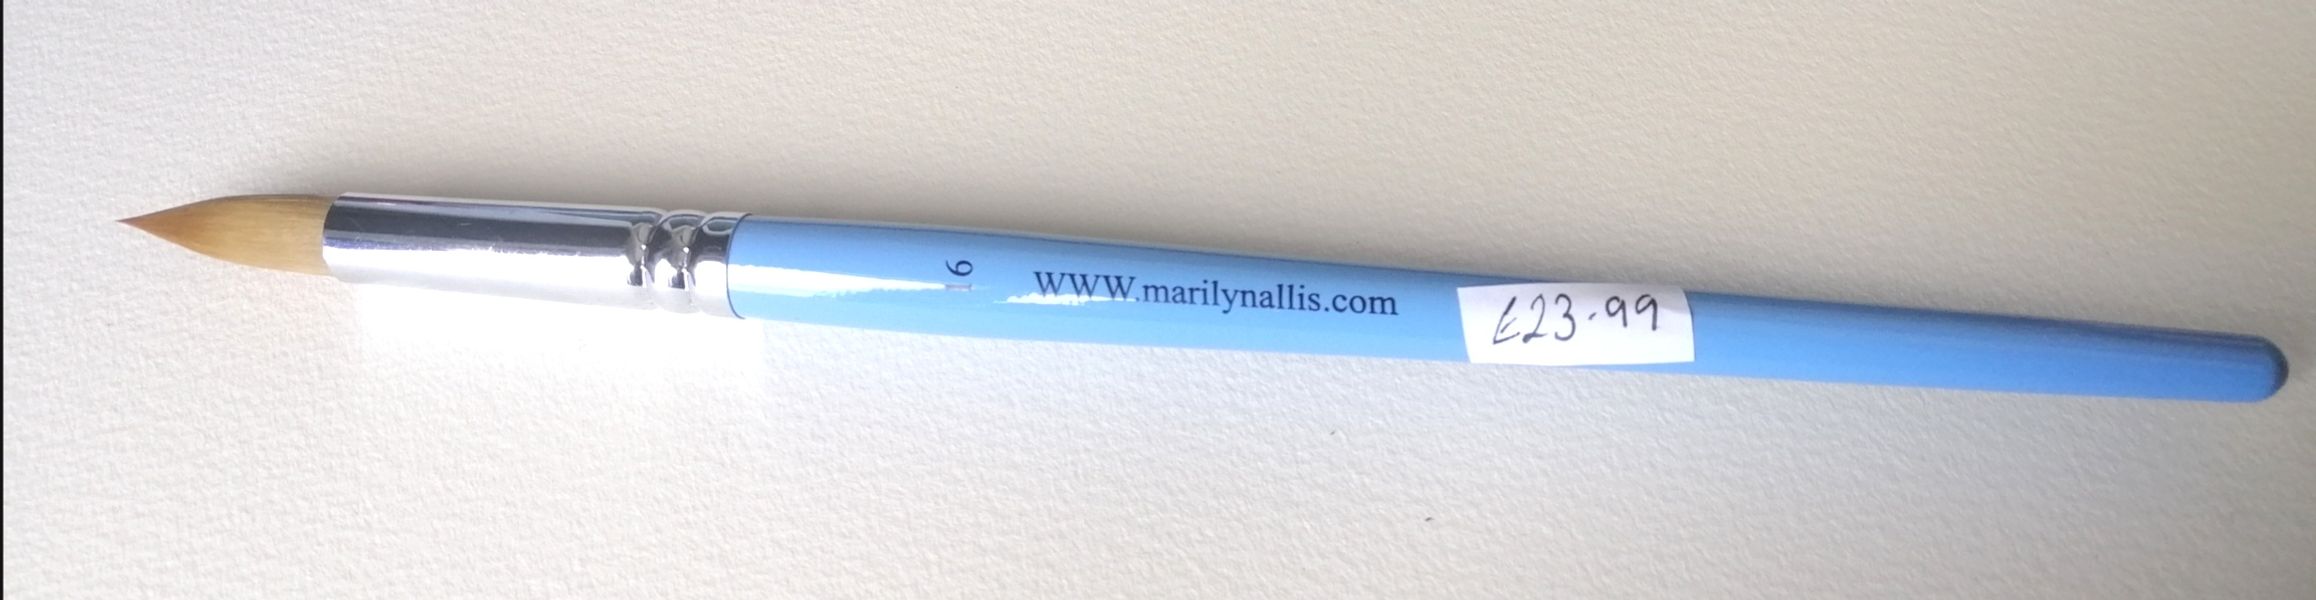 Marilyn Allis size 16 brush